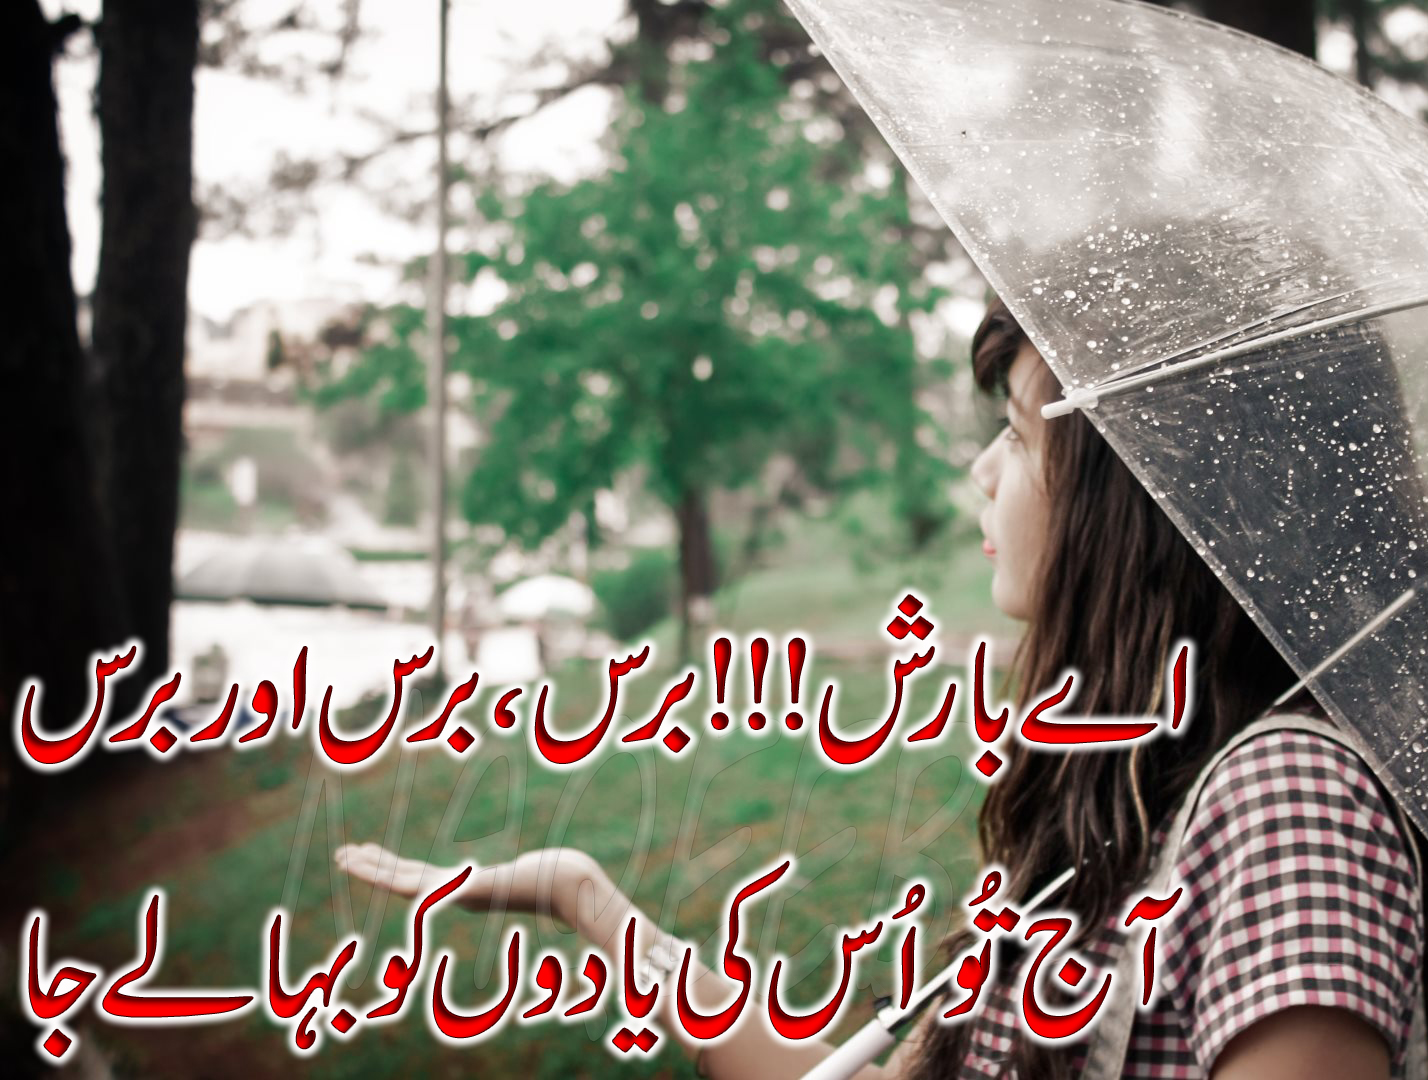 Rain лучший. Barish qoyi. Status about Rain. Women Fashion Urdu Poetry. Sad Poetry.